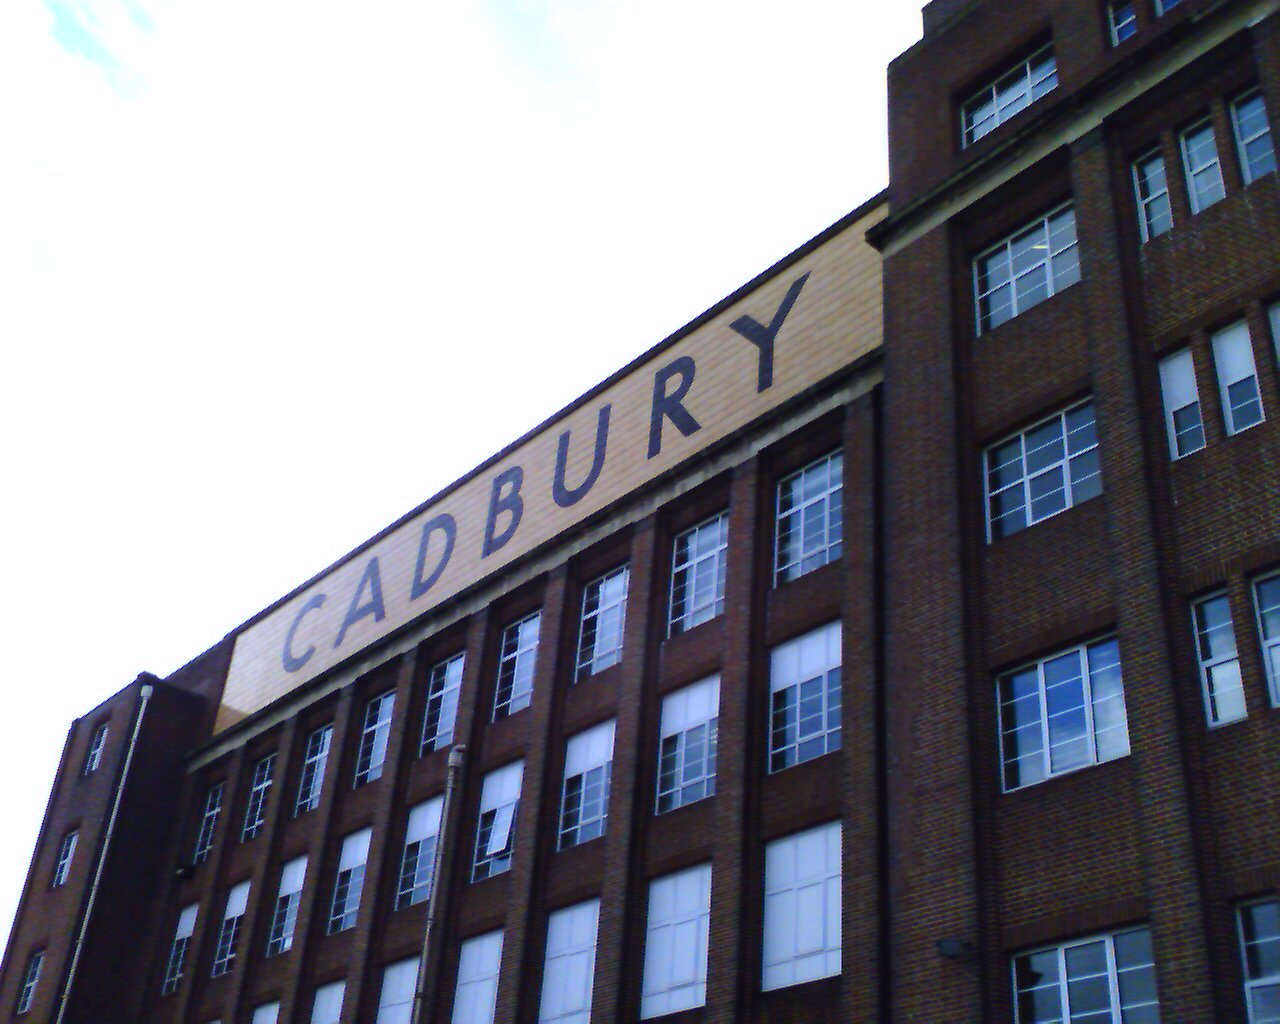 Cadbury Factory